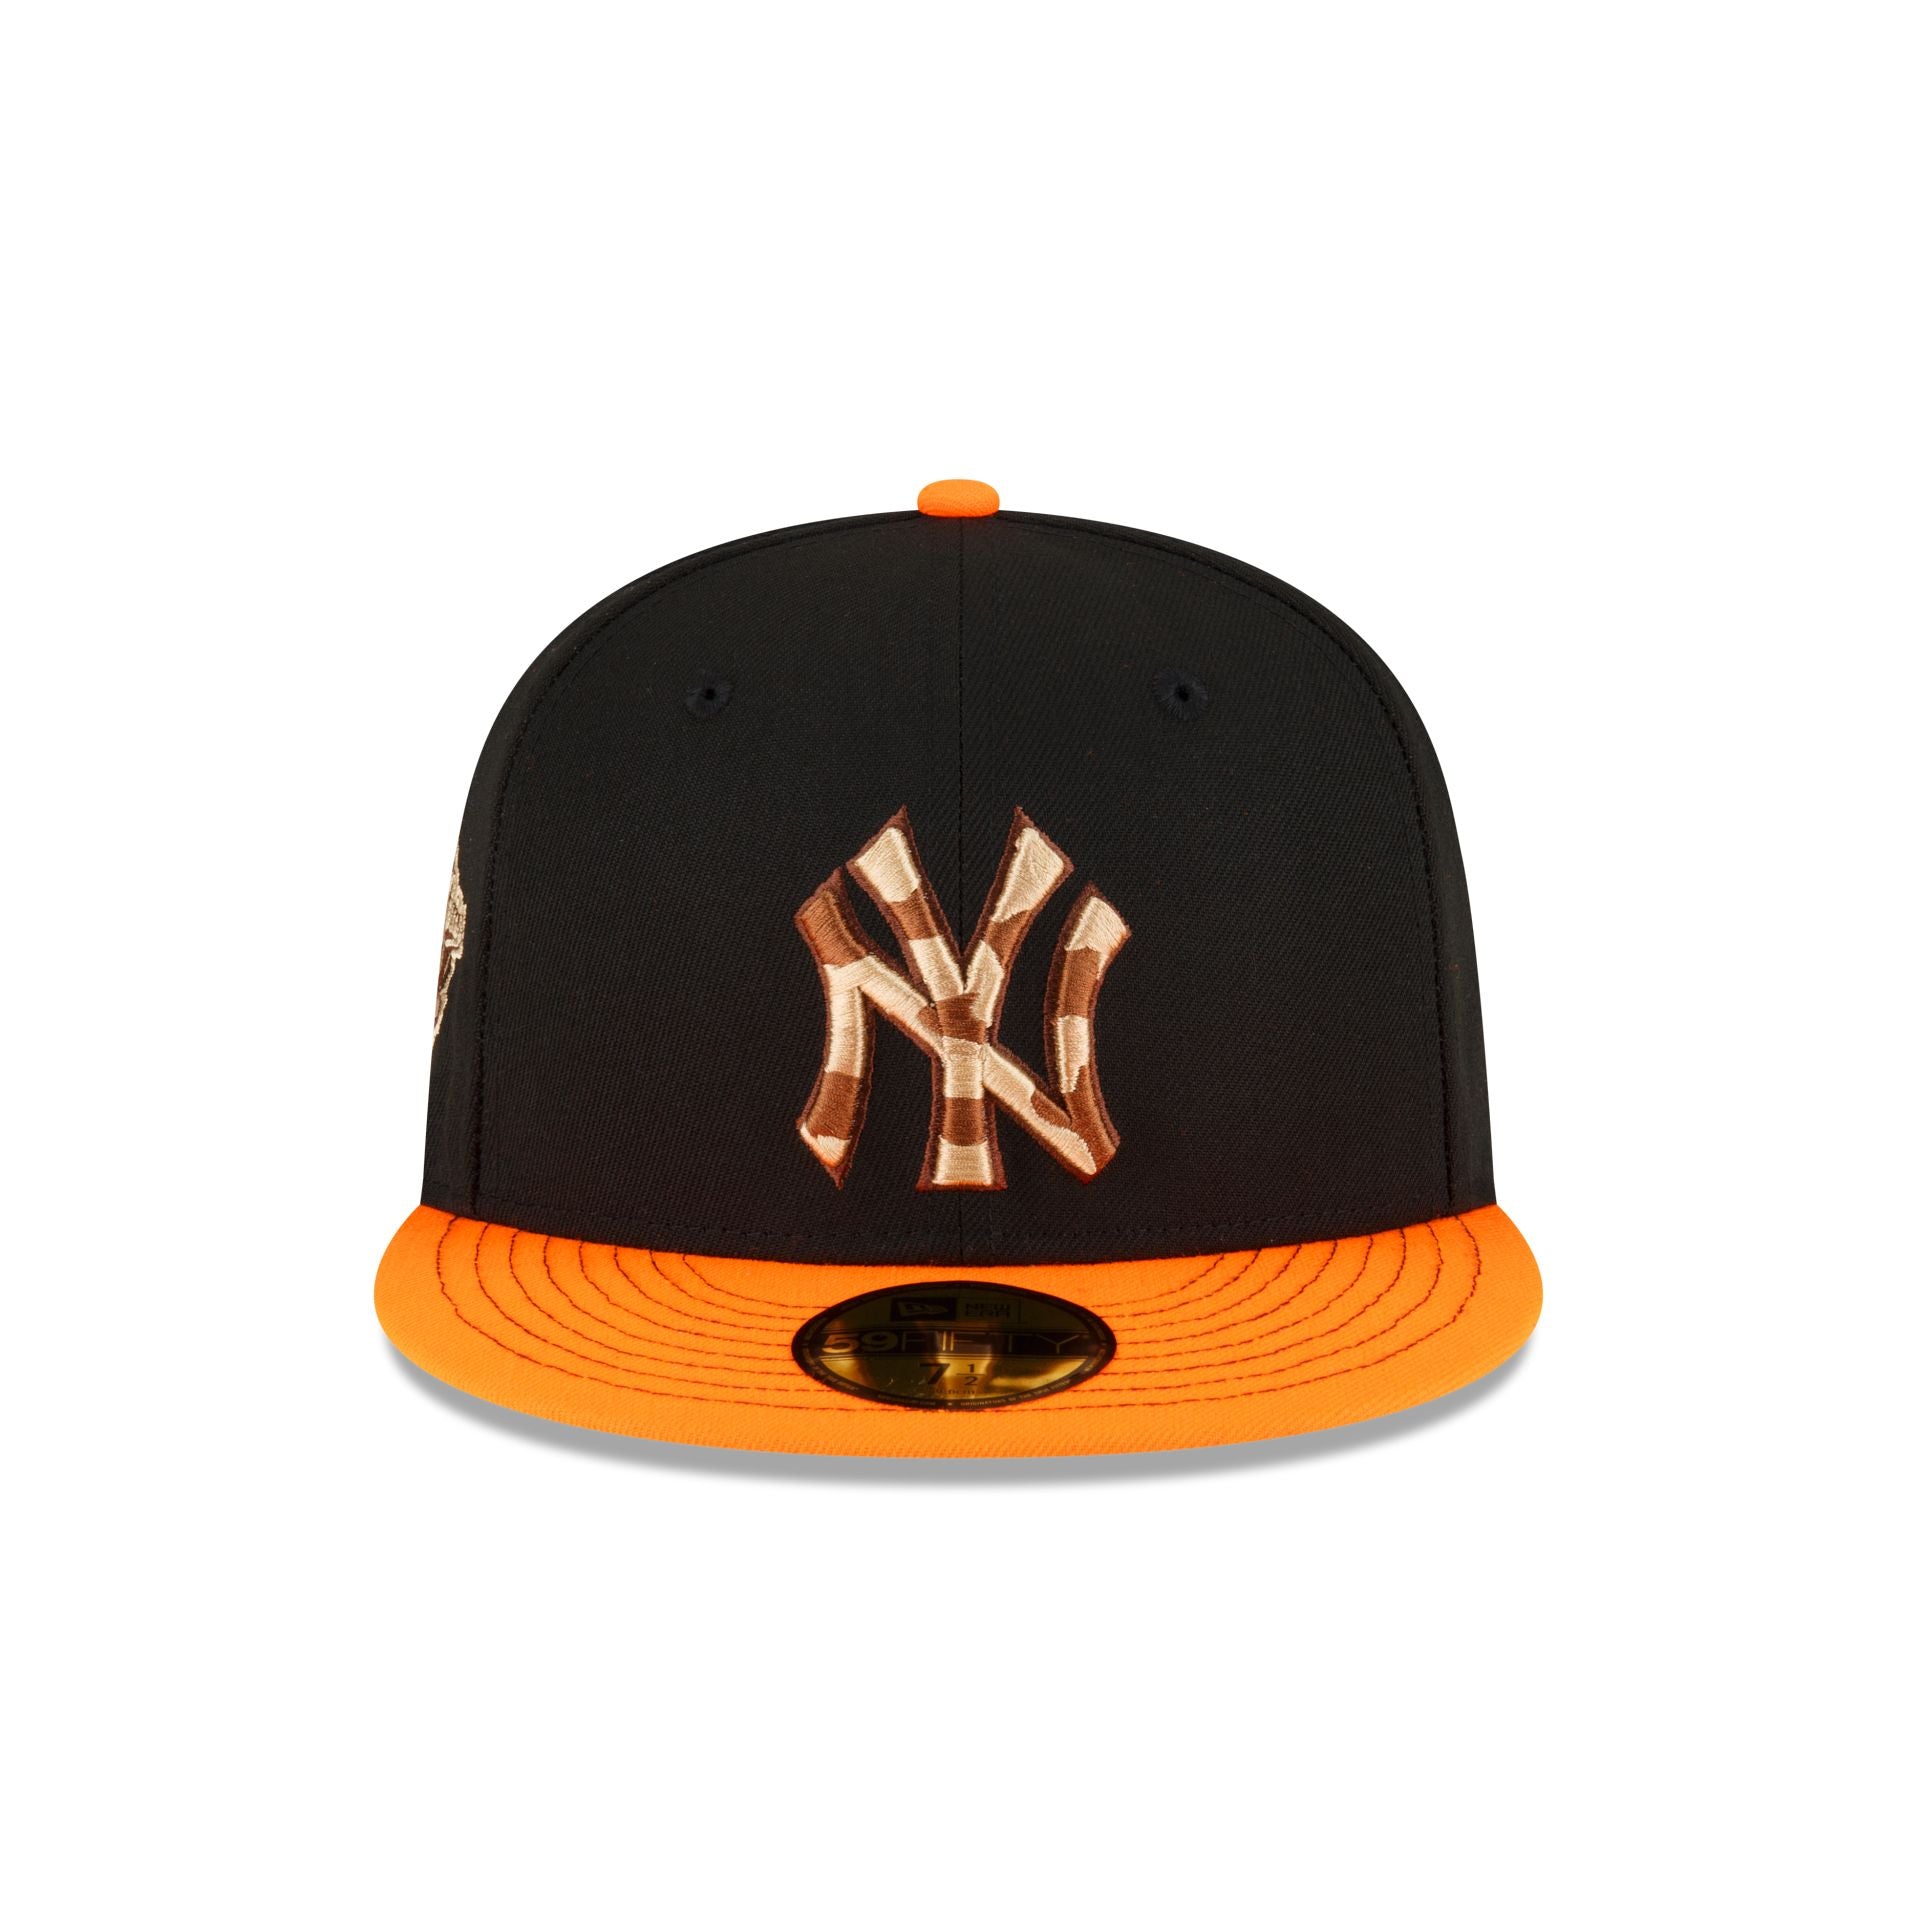 Just Caps Orange Visor New York Yankees 59FIFTY Fitted Hat – New Era Cap